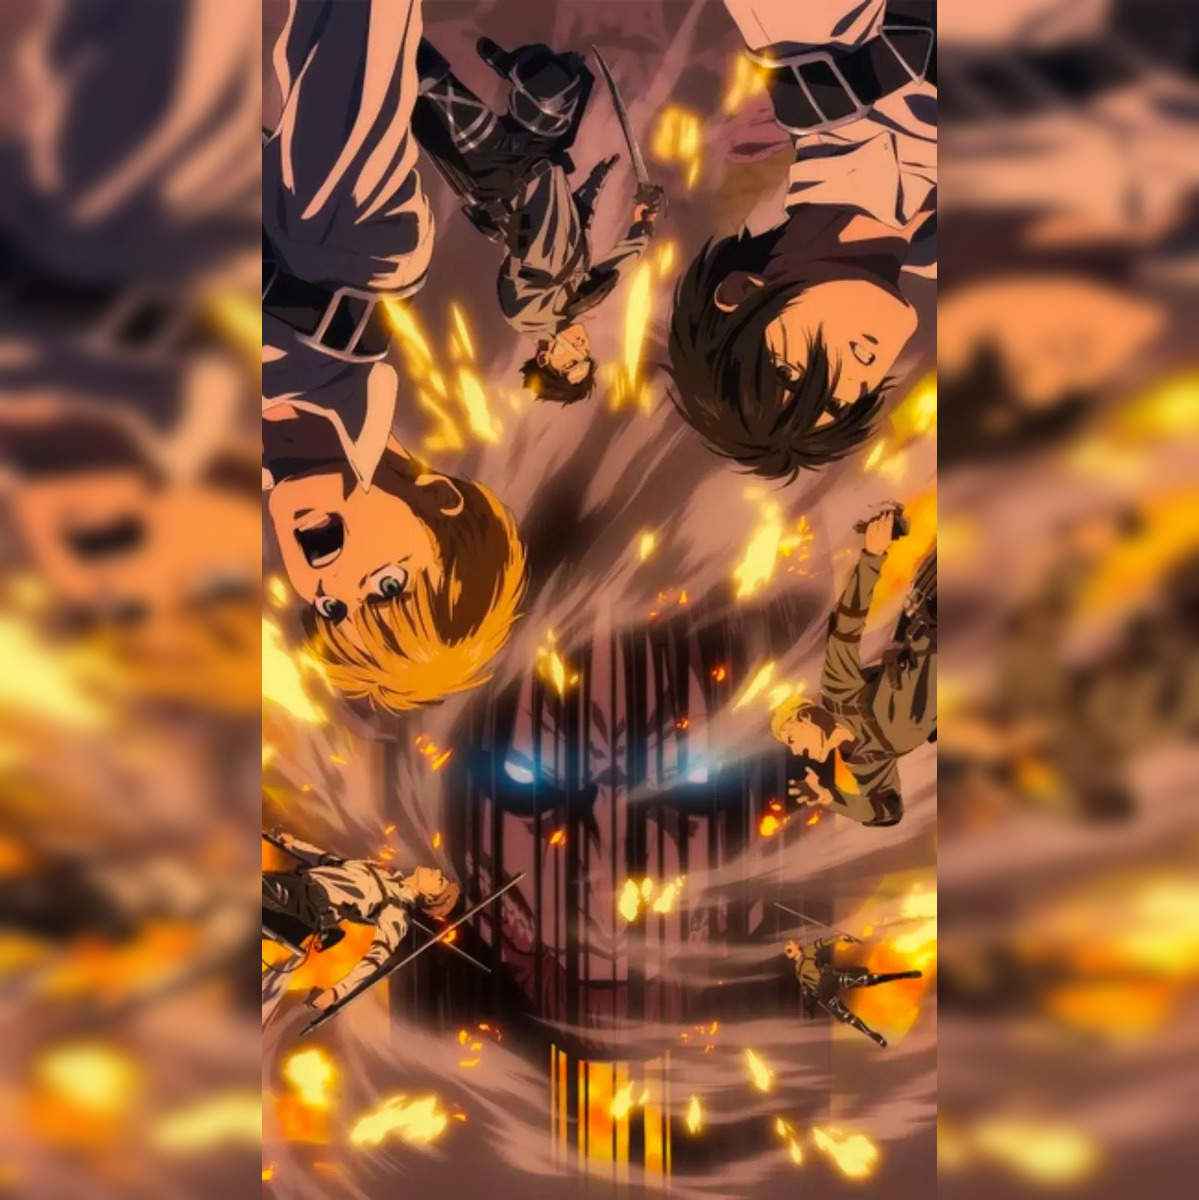 Attack on Titan - Attack on Titan Season 3 - New Key Visual 🔥